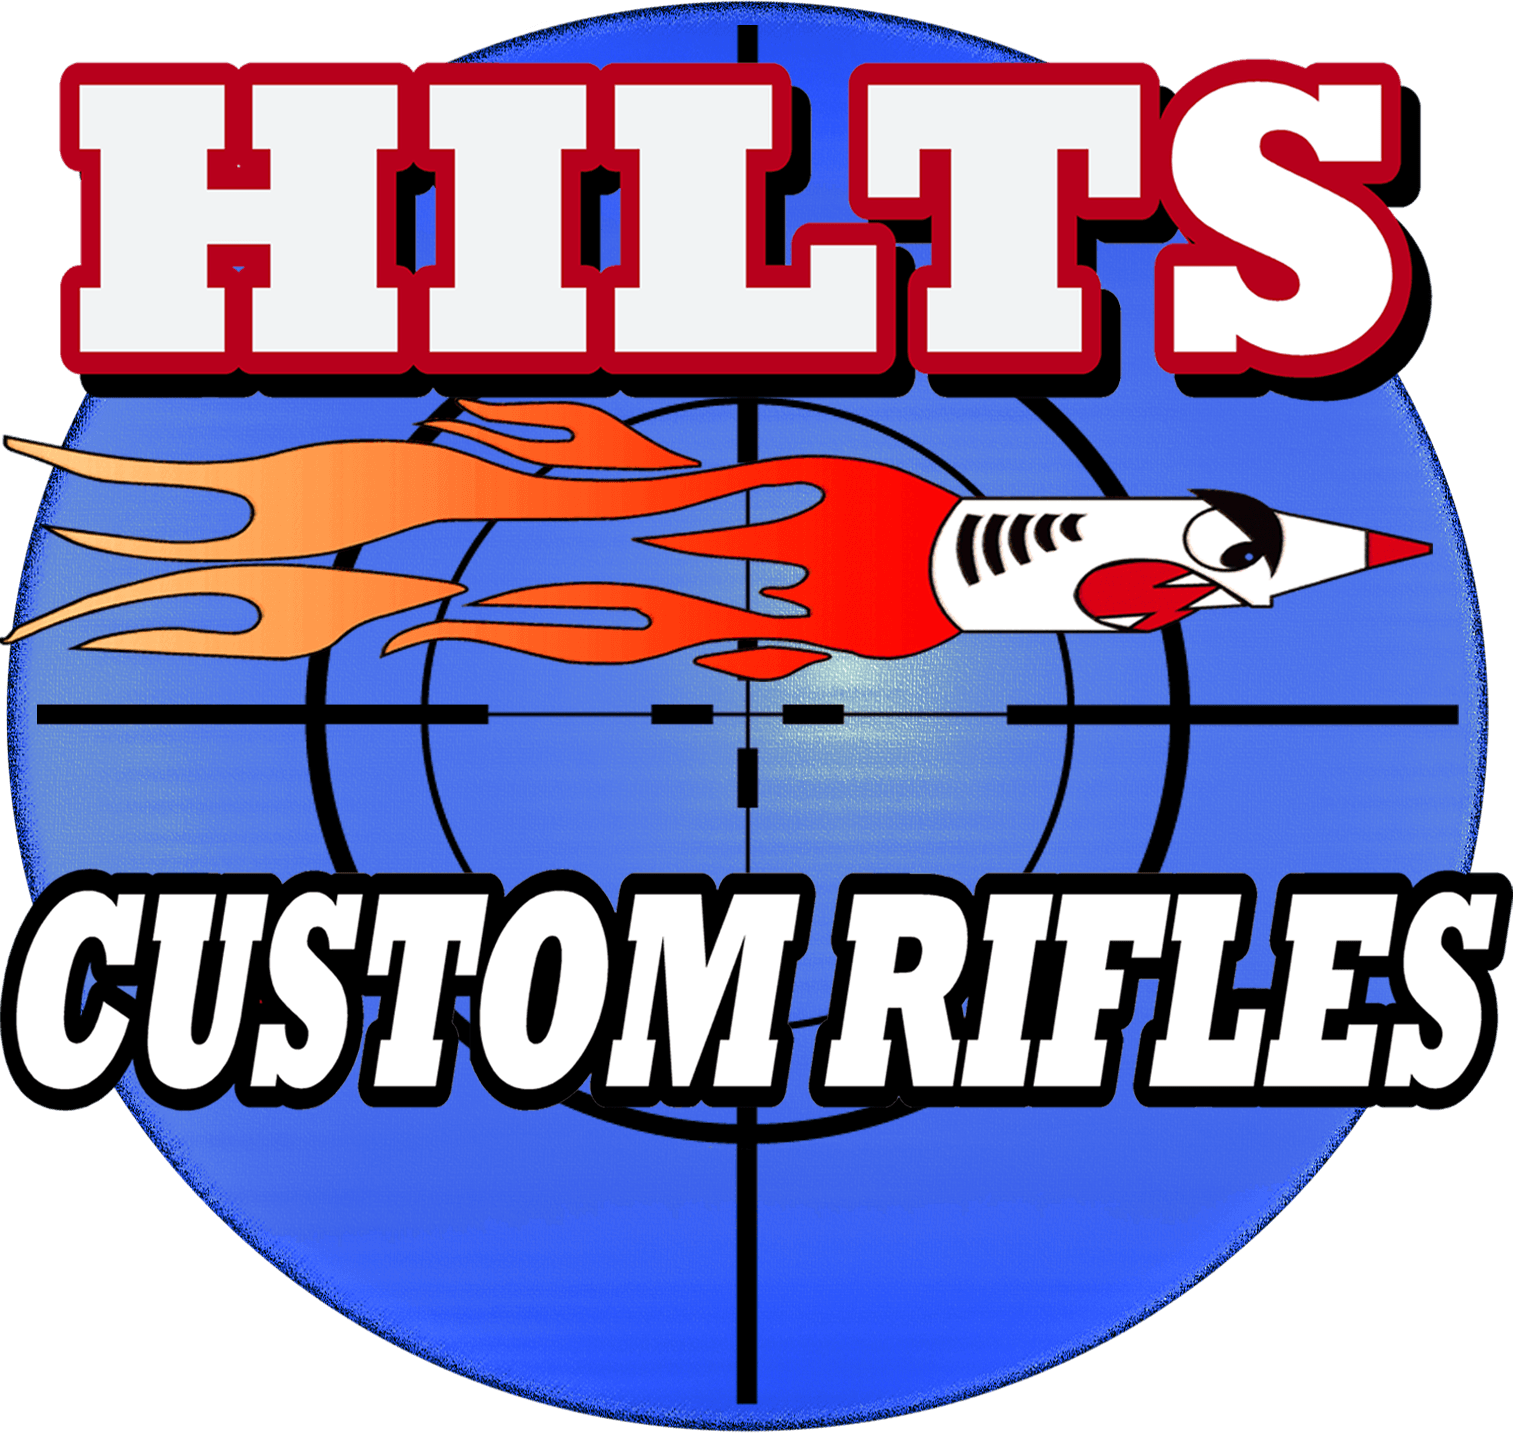 hilts rifles logo